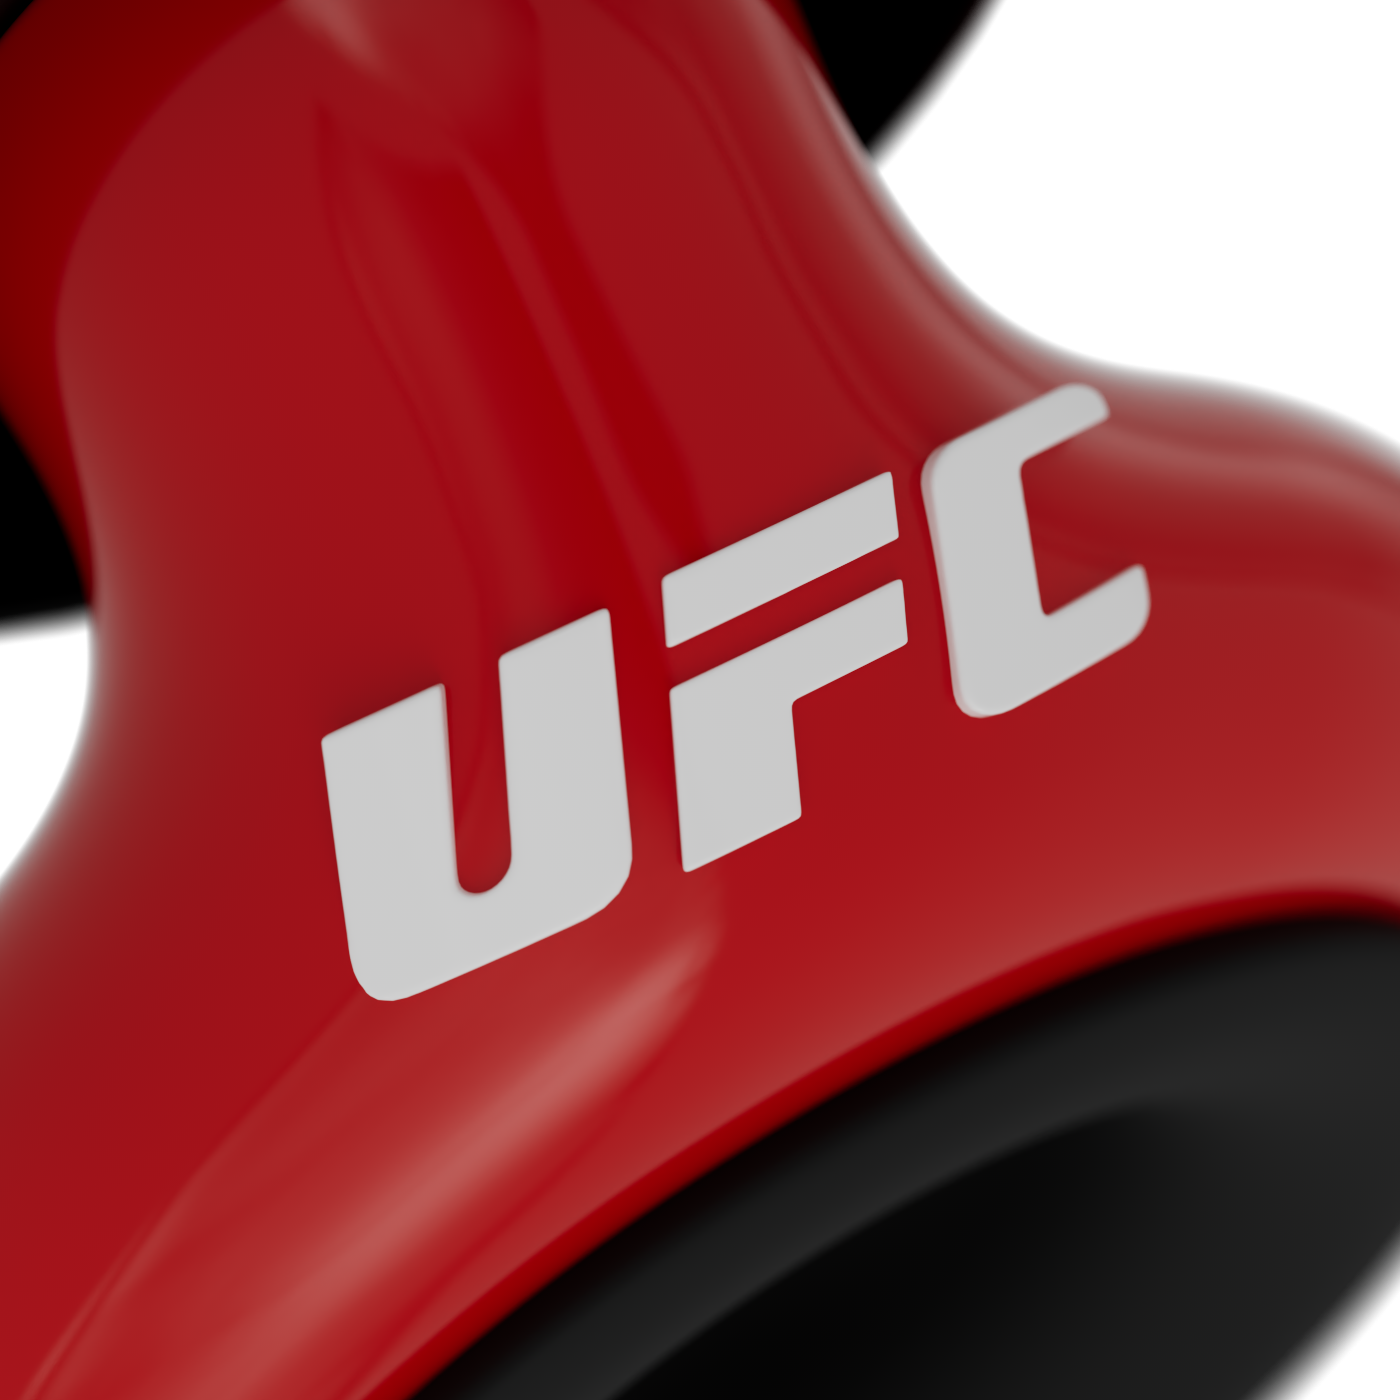 The UFC logo on the Loops Earplug.